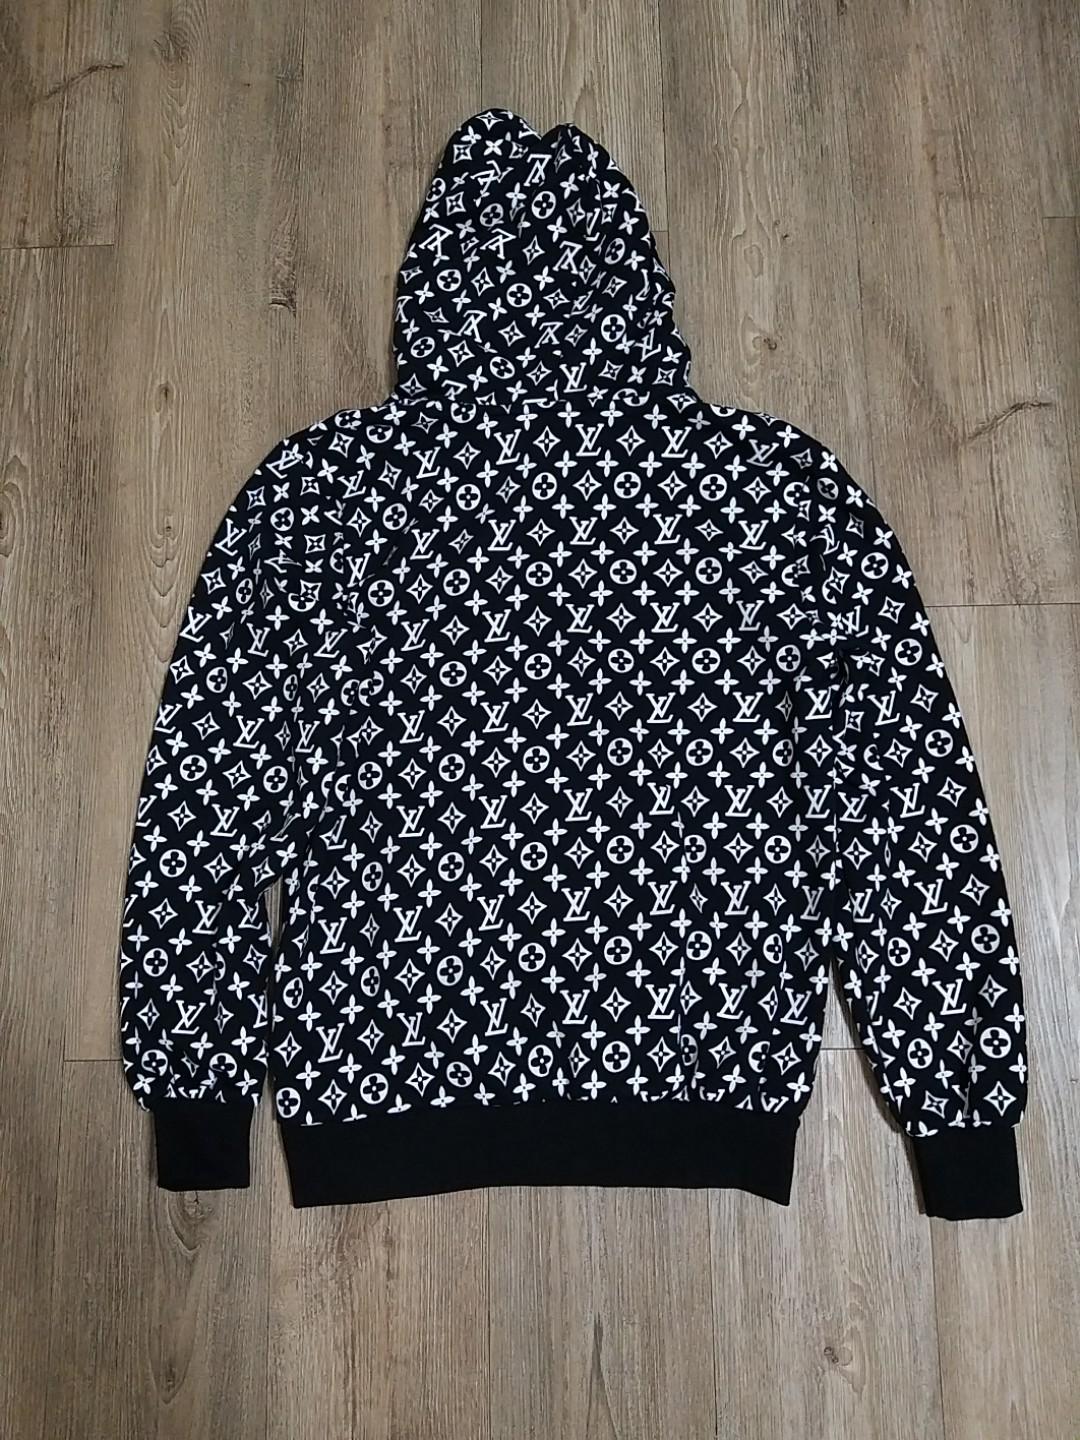 black lv supreme hoodie